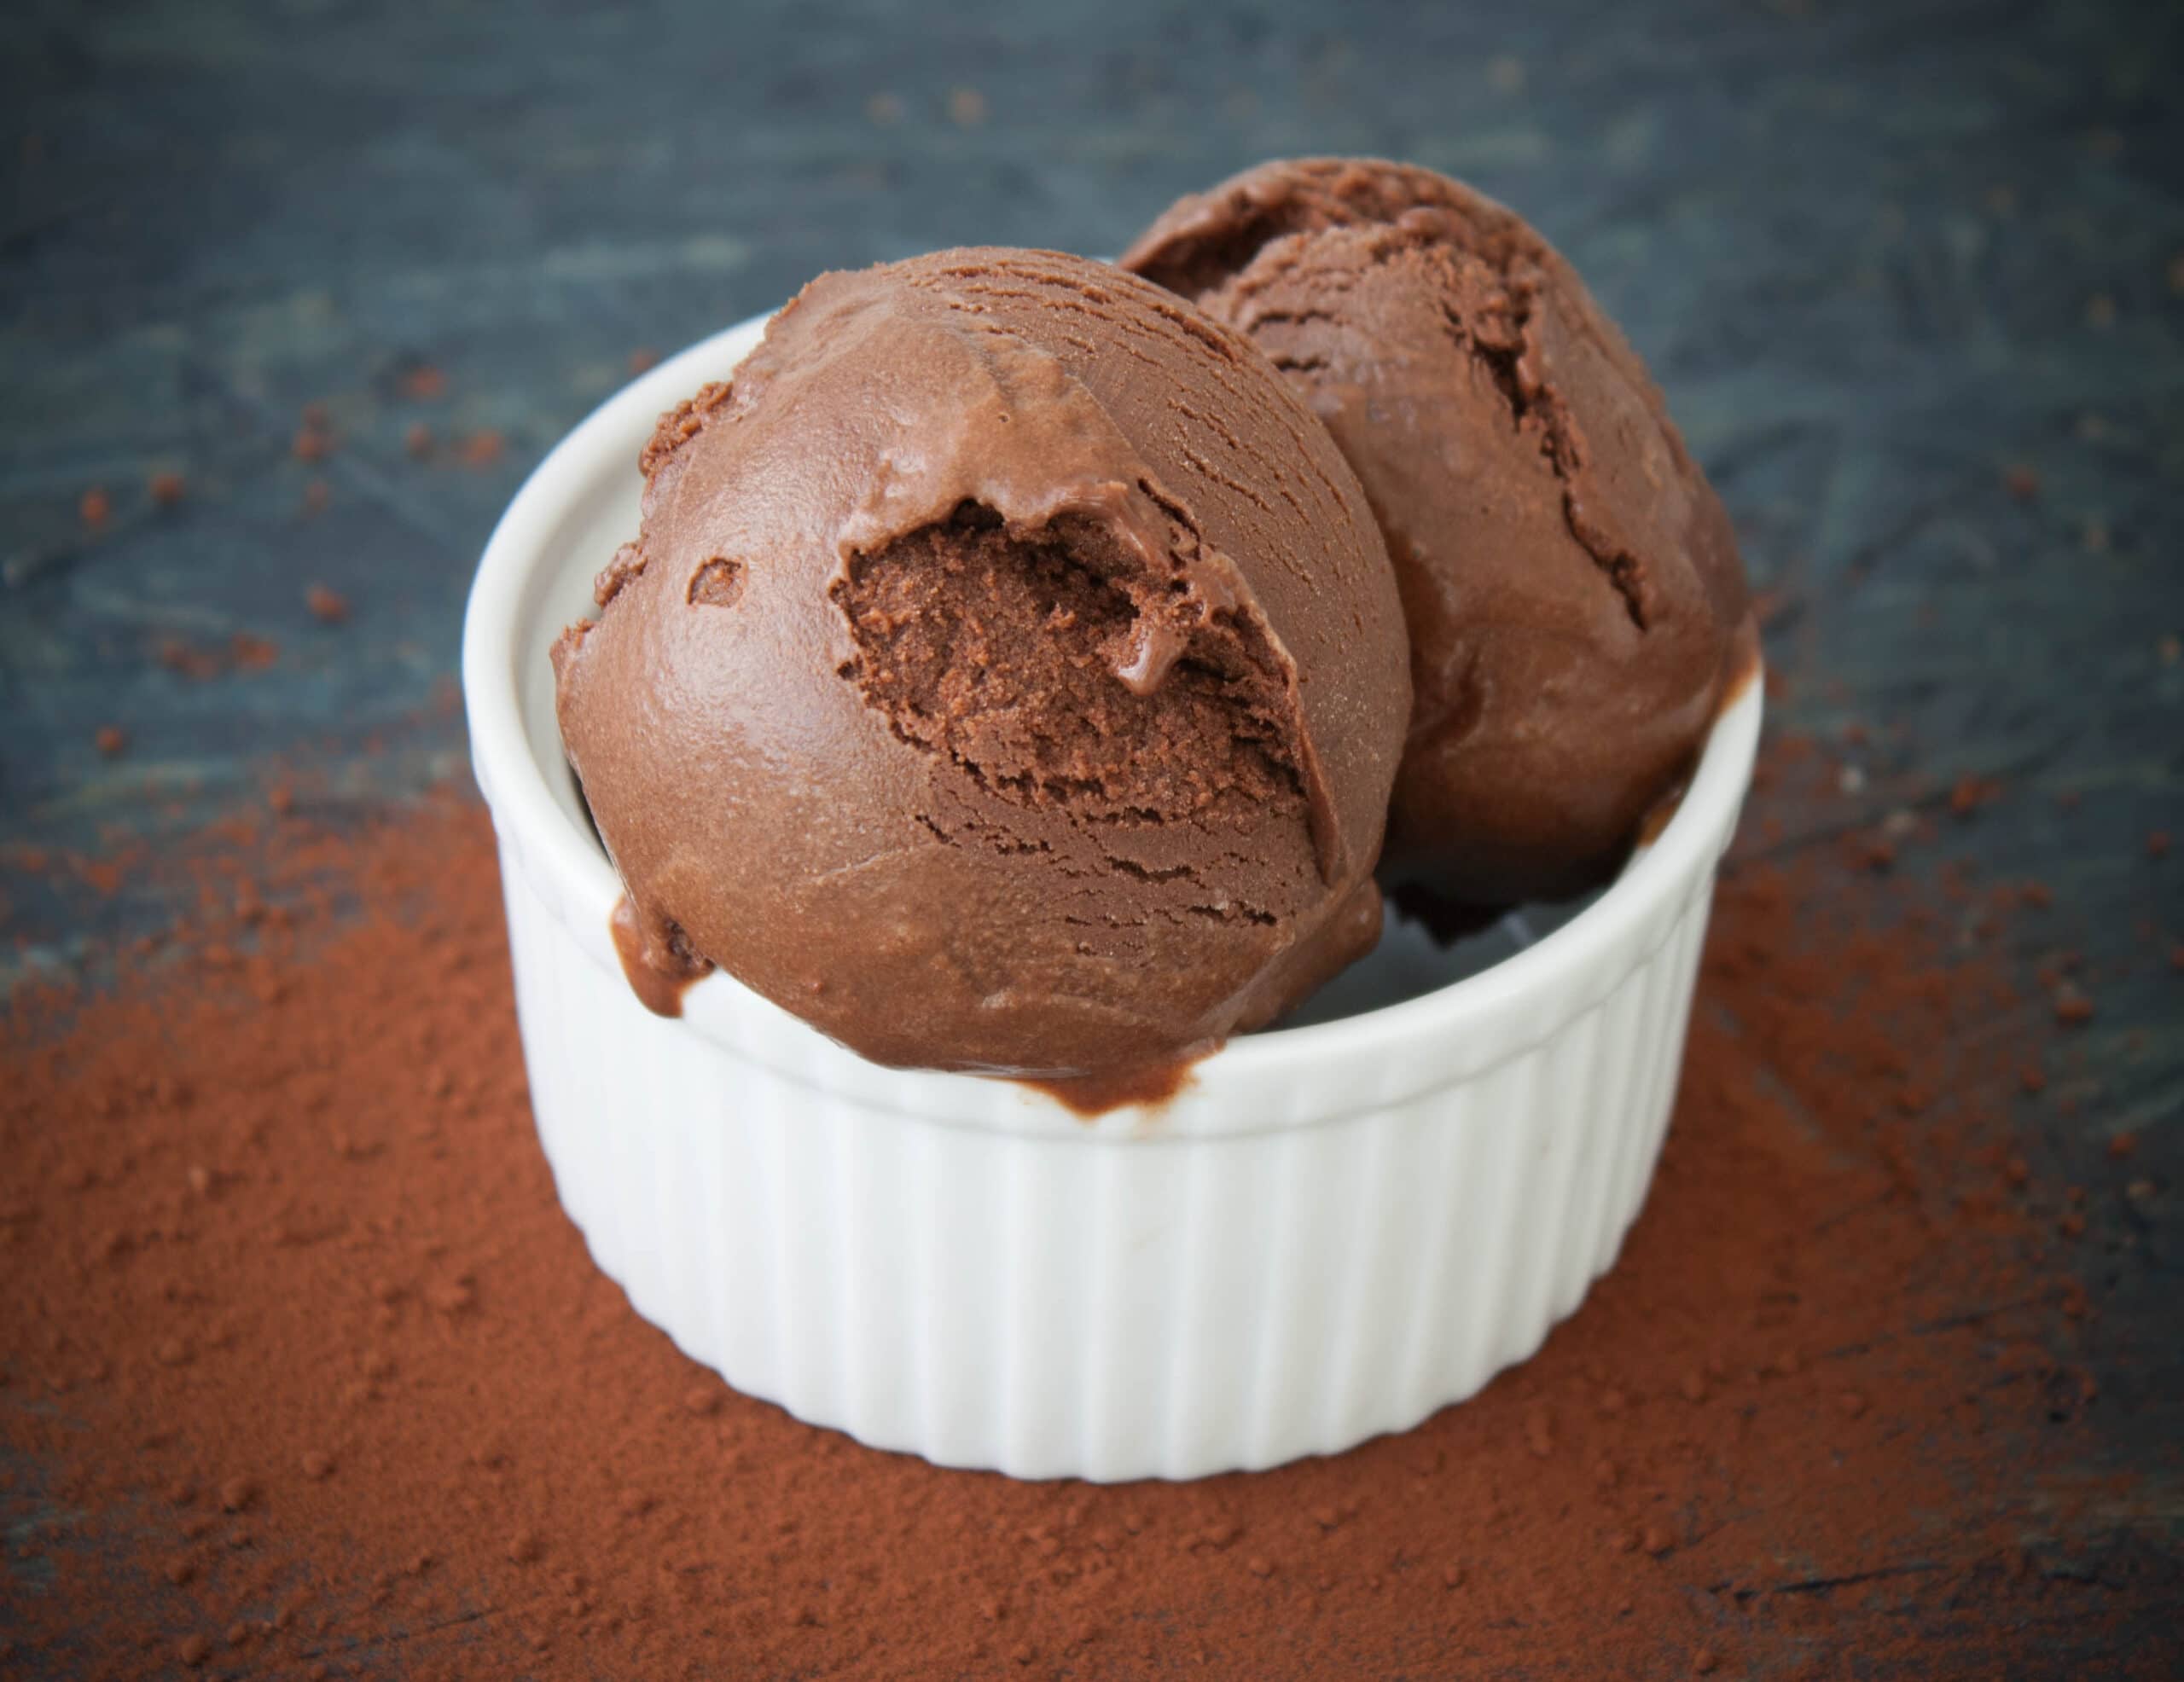 Choco ice. Айс Чоко, шоколадное мороженое. Красивое шоколадное мороженое. Мороженое с шоколадом. Домашнее шоколадное мороженое.